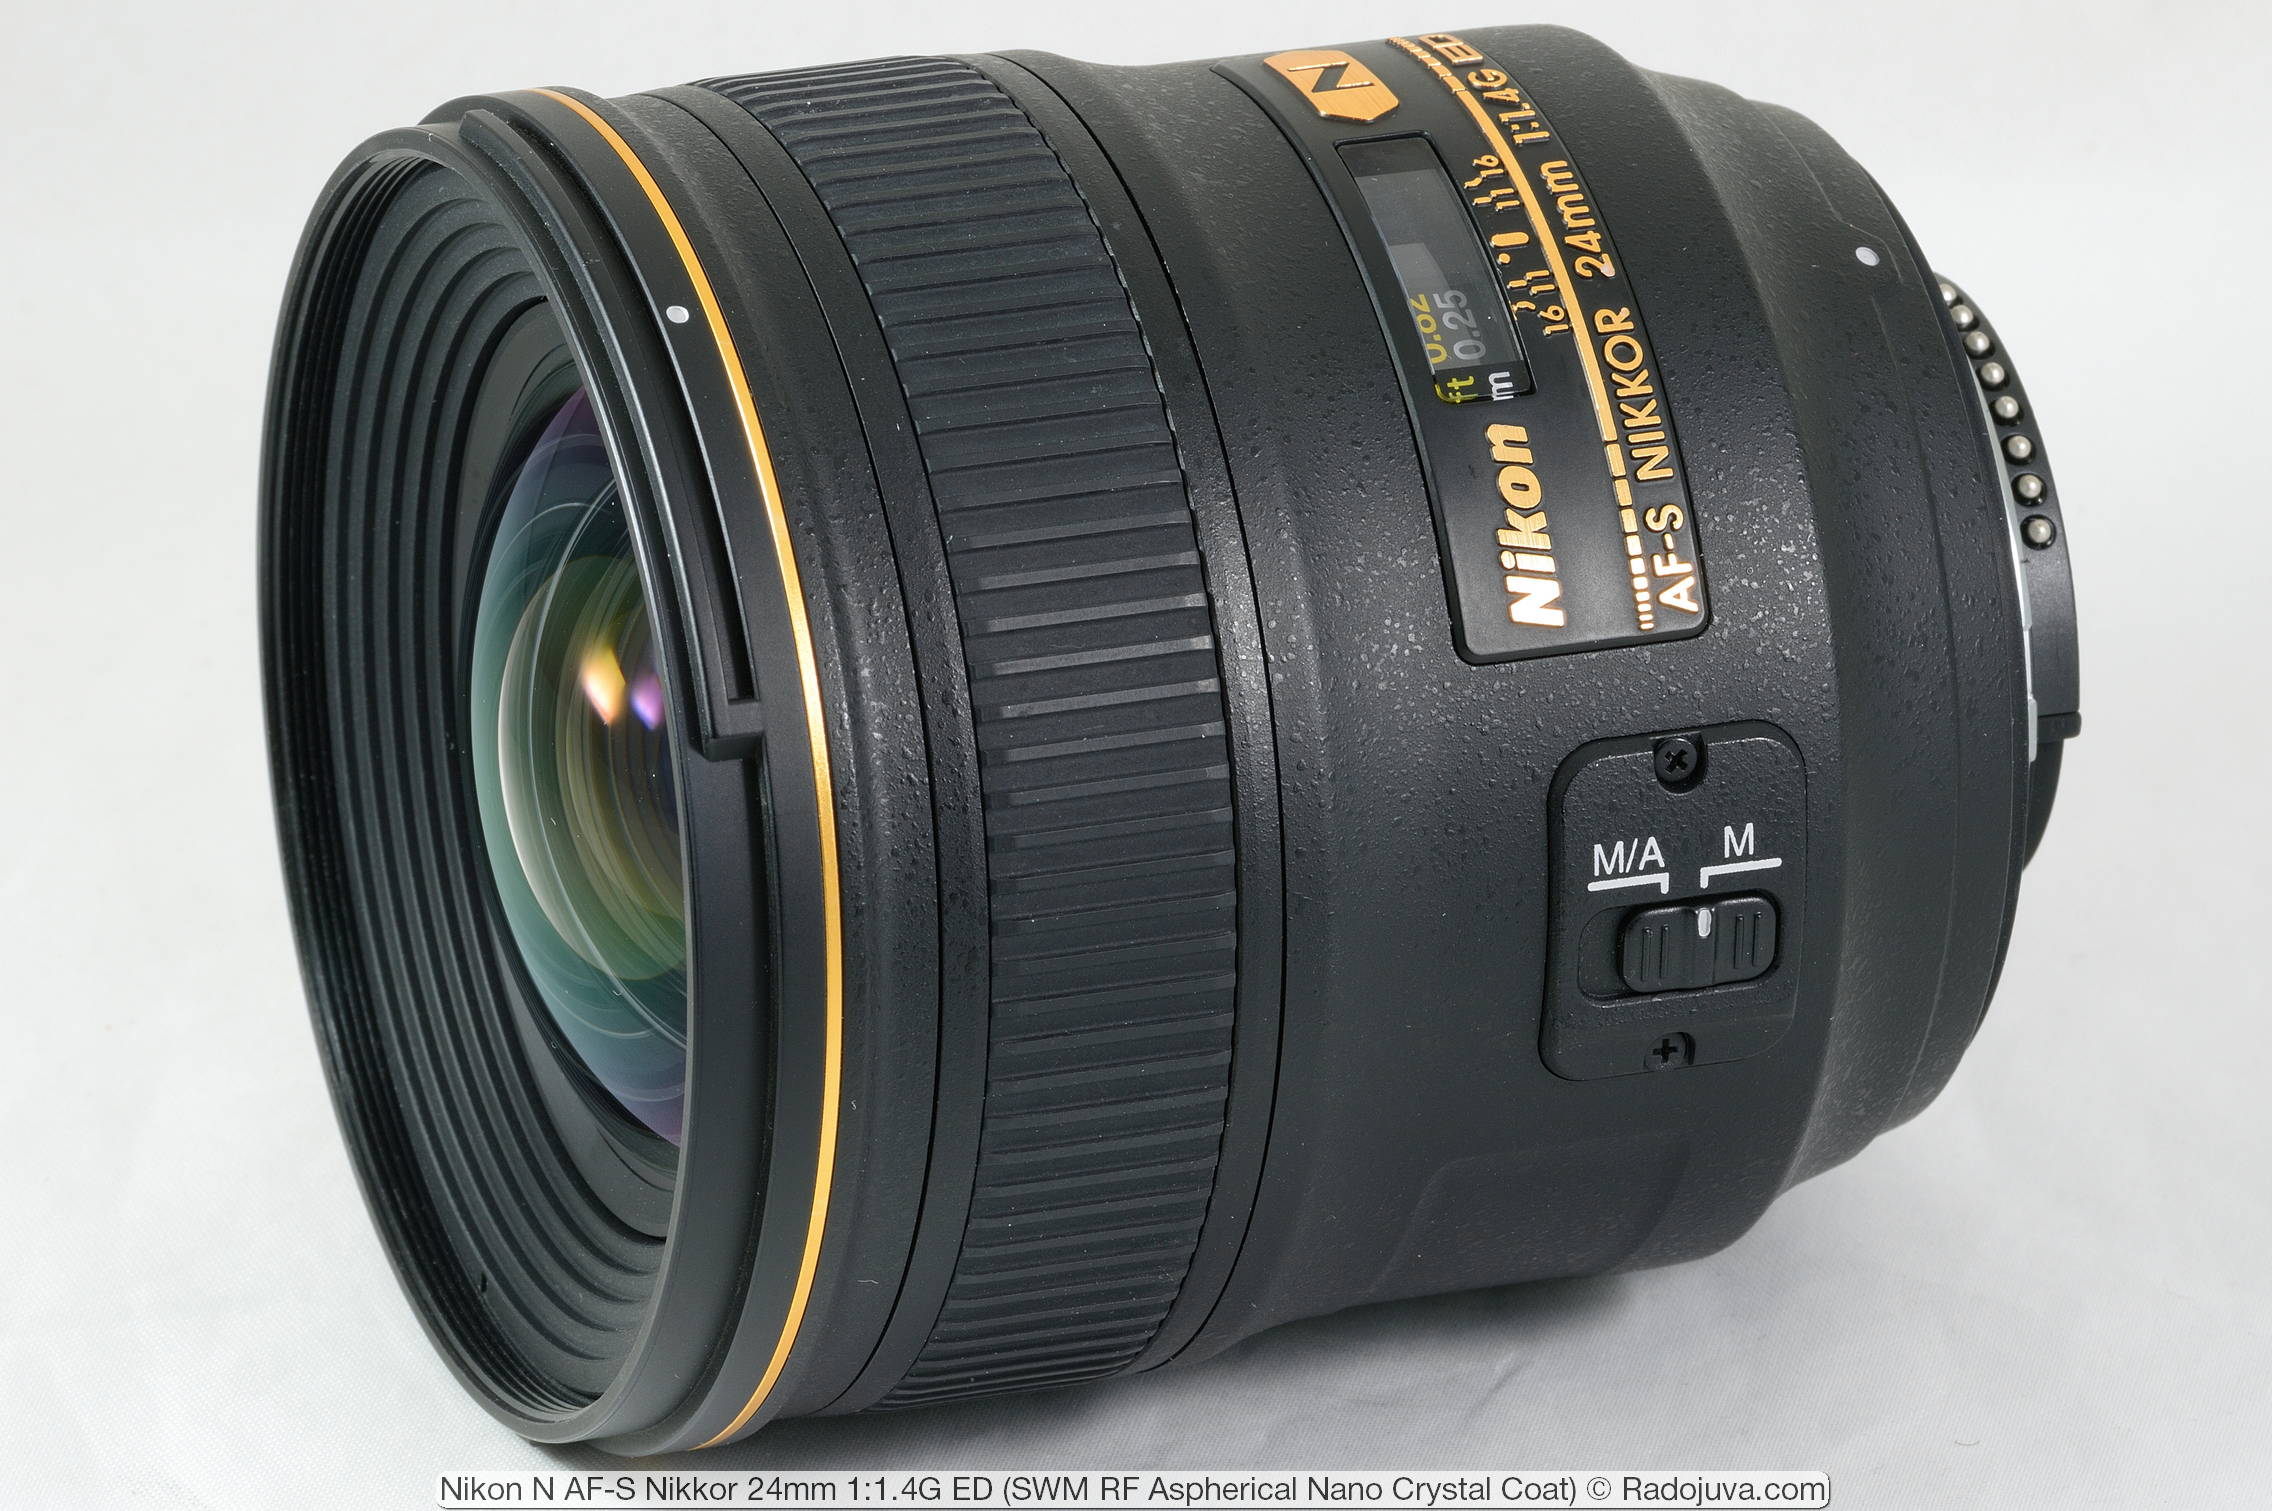 Nikon N AF-S Nikkor 24mm 1: 1.4G ED (SWM RF Aspherical Nano Crystal Coat)